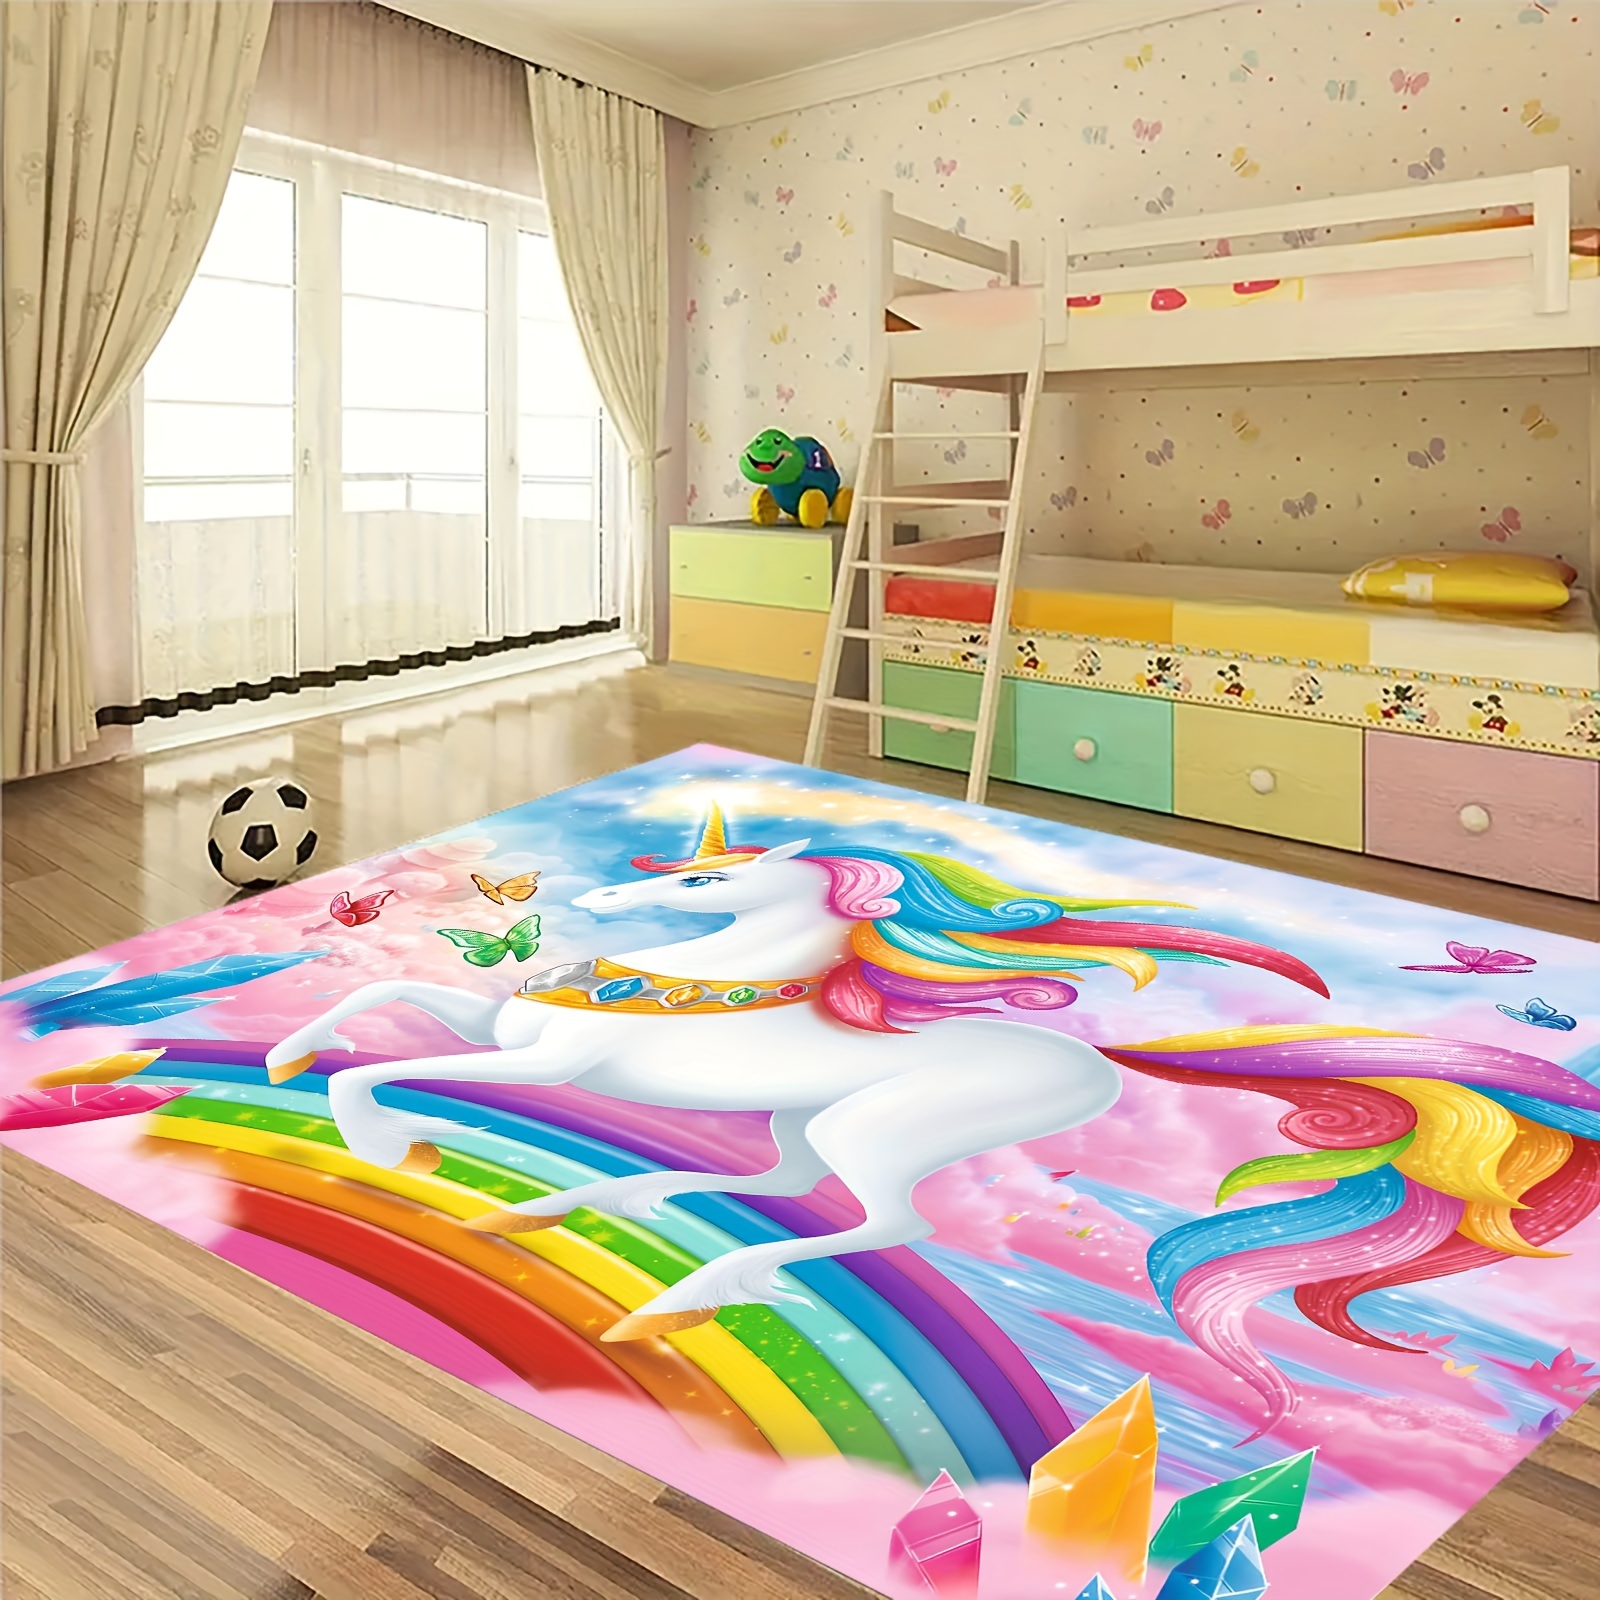 

1pc Unicorn Area Rug, Non-slip Floor Mat For Living Room, Bedroom, Game Room, Door Entrance, Bathroom, Home Decor